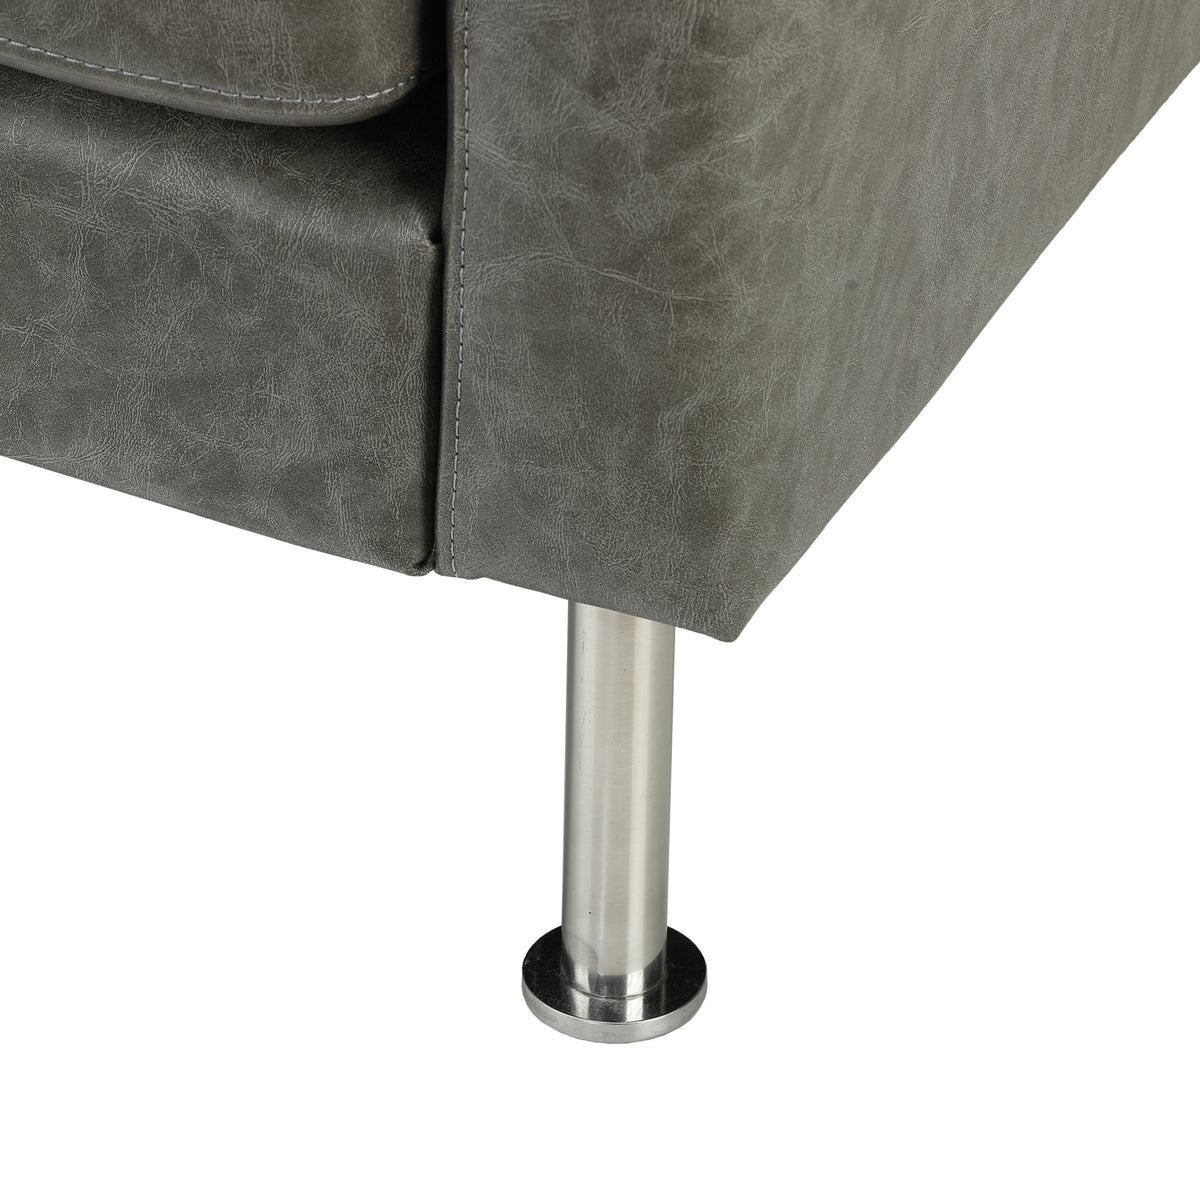 Cortesi Home Nicki Arm Chair with Adjustable Headrest, Grey